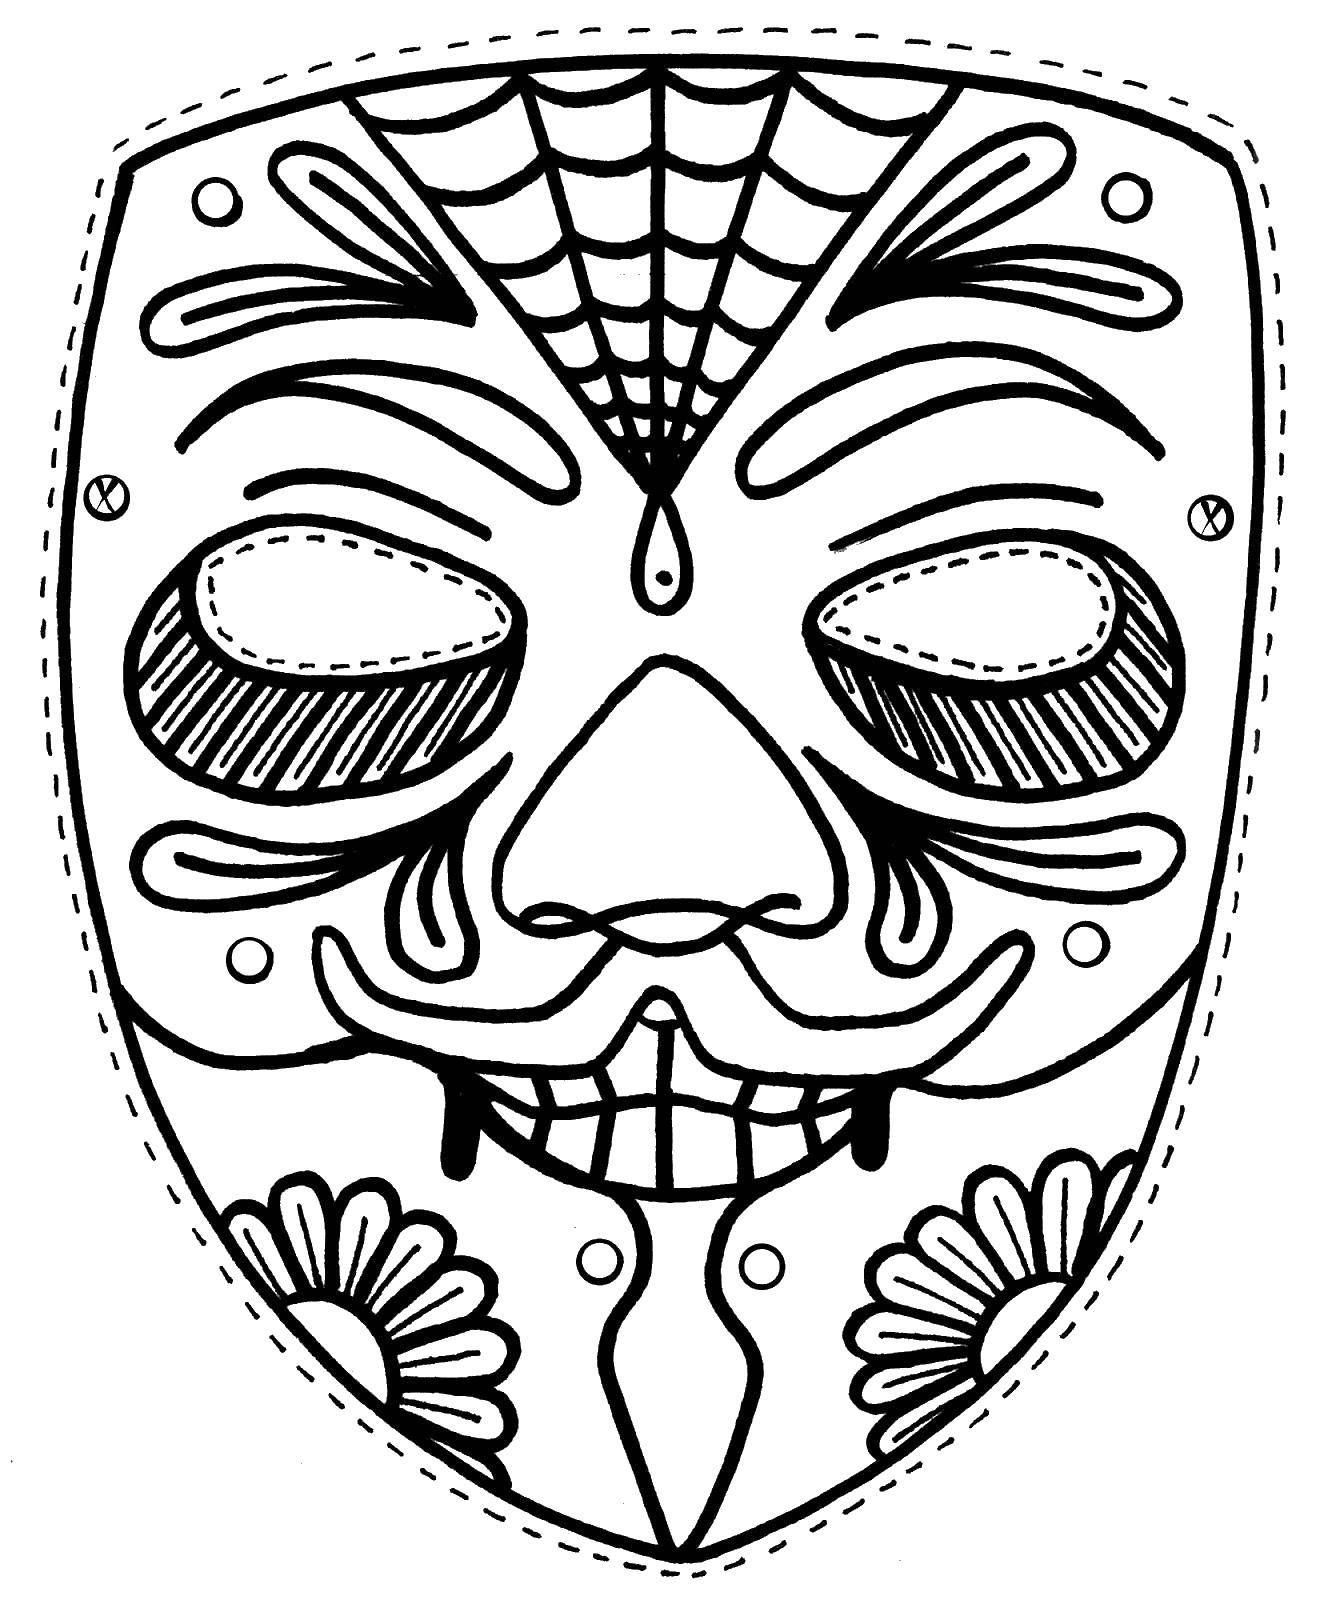 Раскраски масок маска для Хэллоуина (маски, дети, маска)